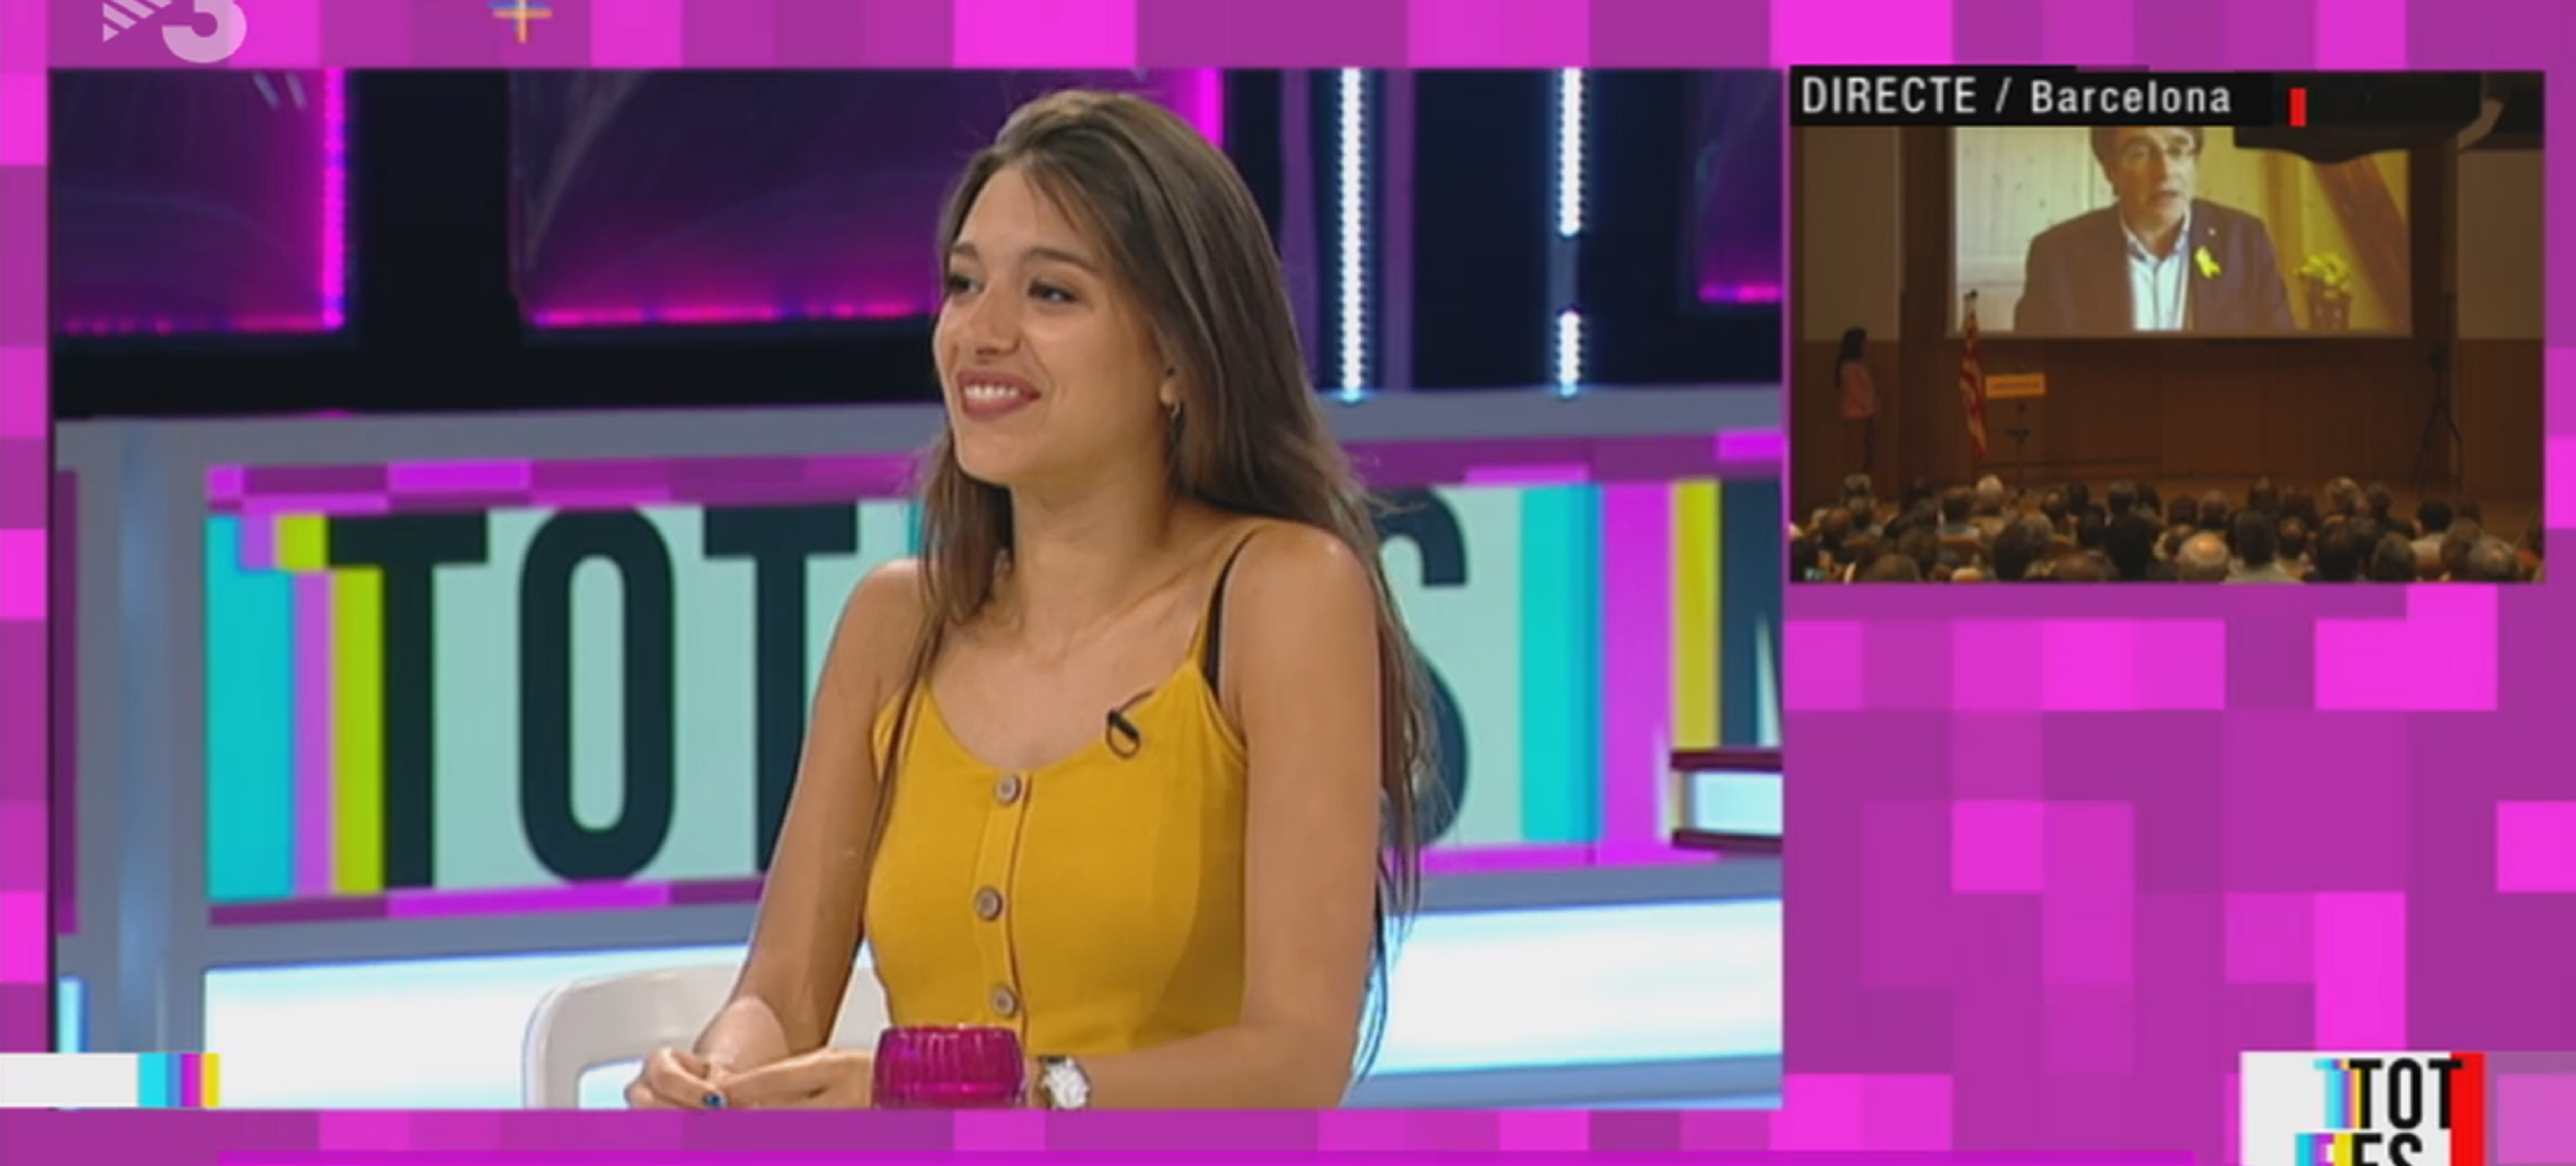 Ana Guerra vuelve de amarillo a TV3 y en pantalla partida con Puigdemont